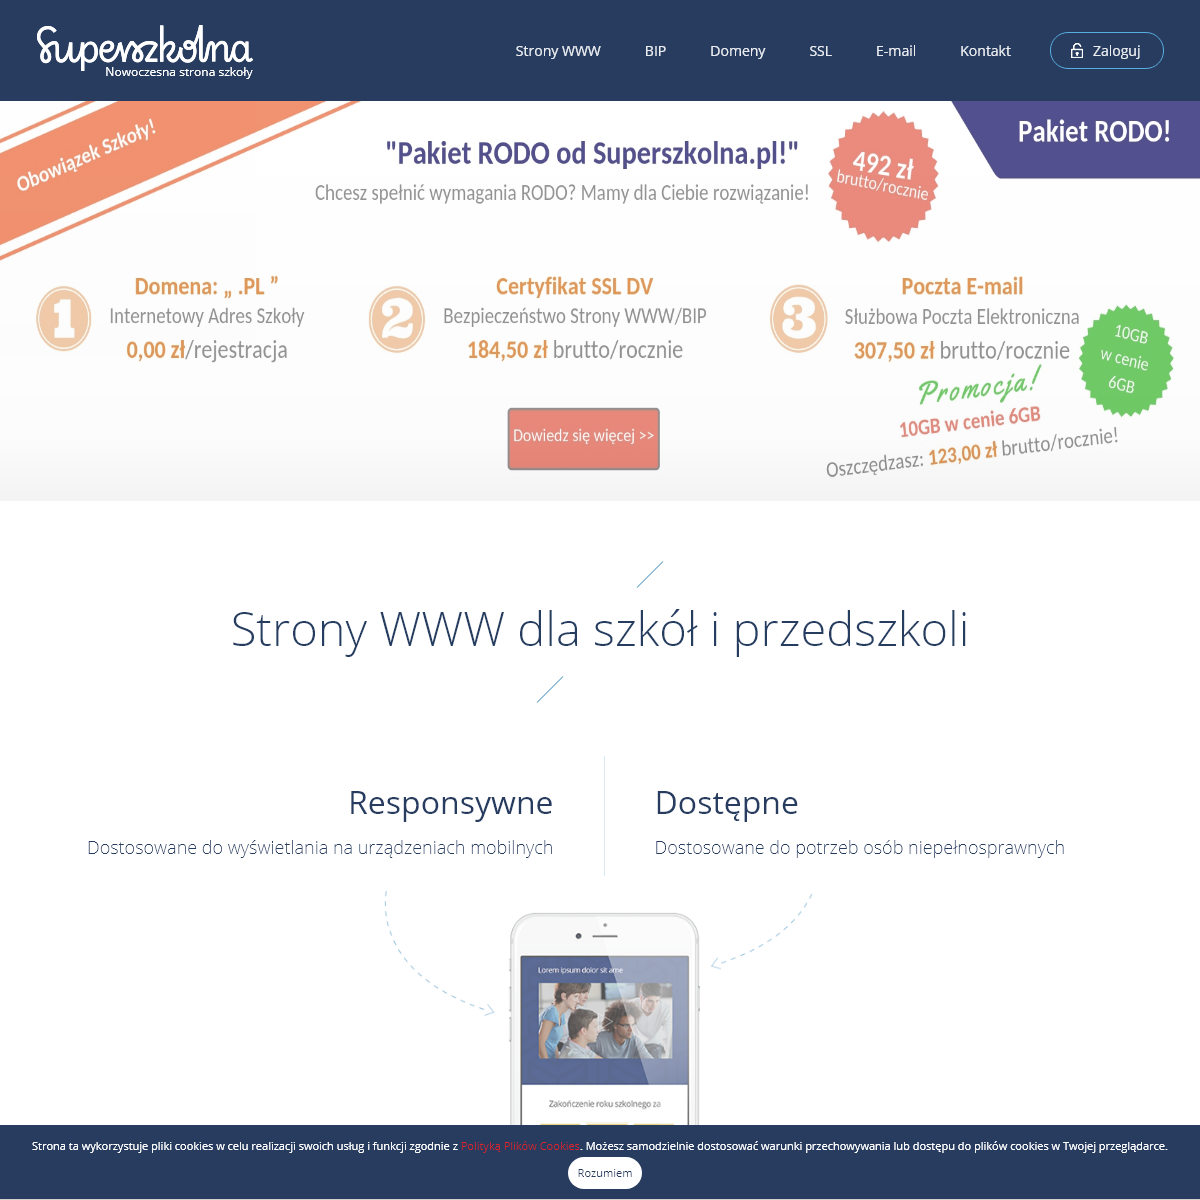 A complete backup of superszkolna.pl